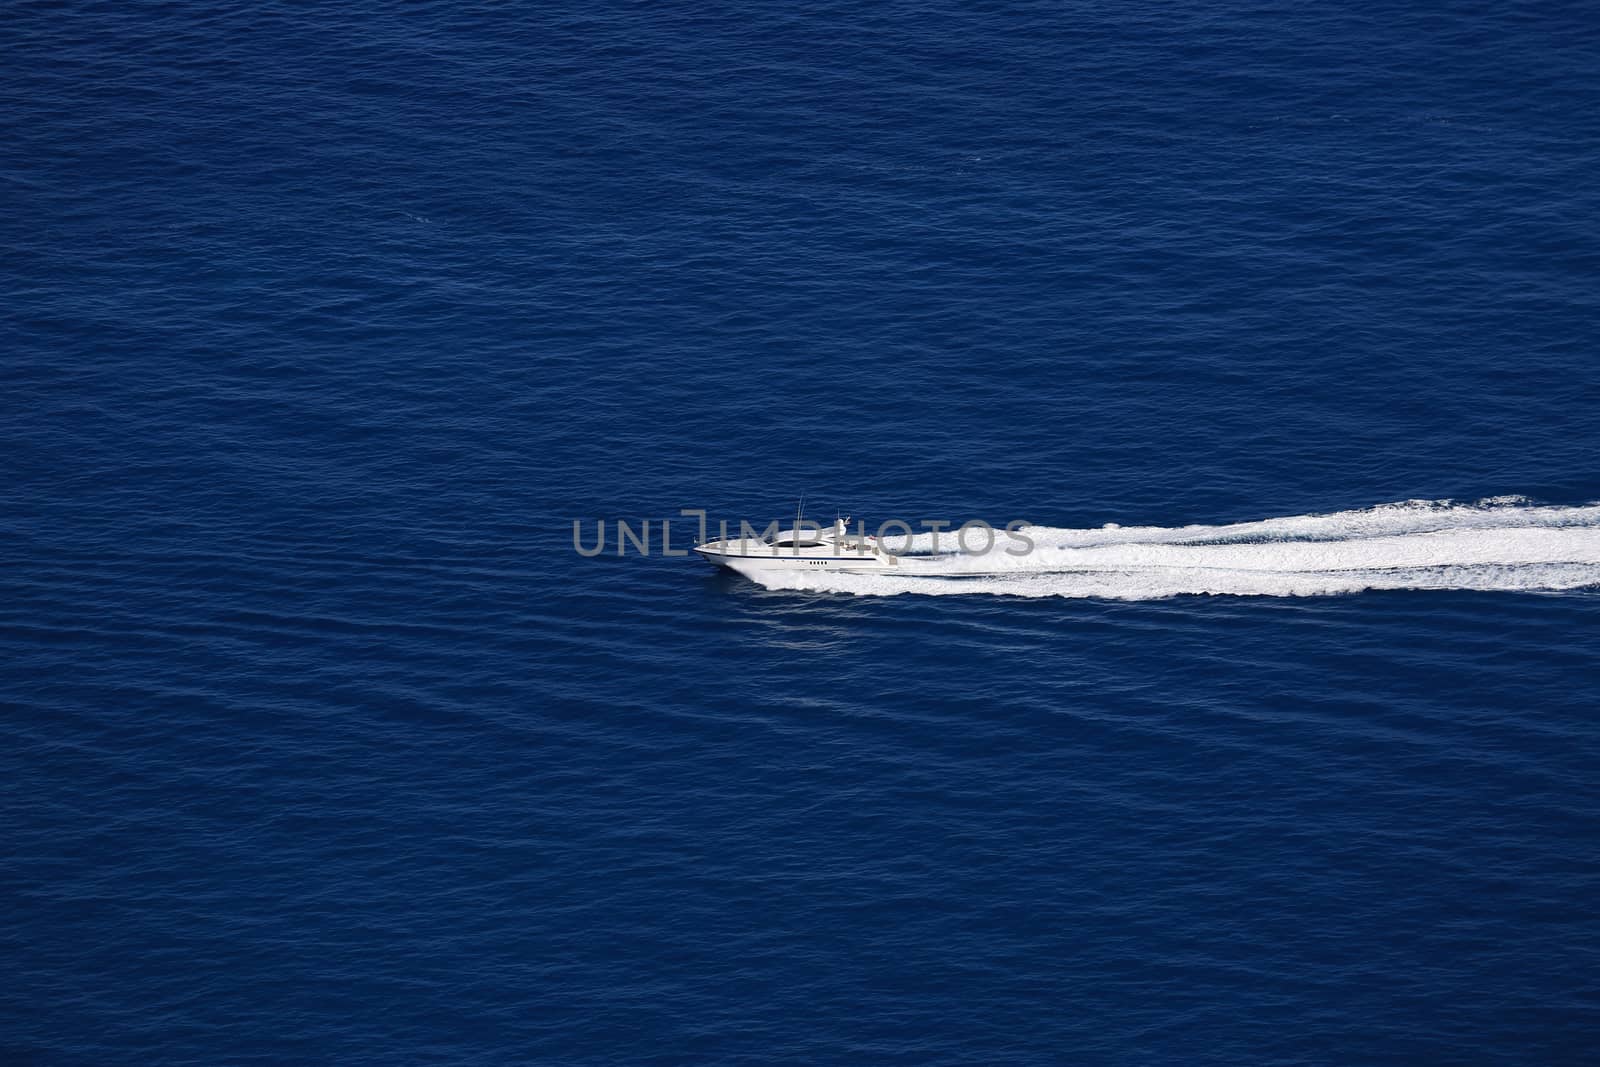 Luxury Boat Wake on Mediterranean Sea, between Cap d'Ail and Monaco